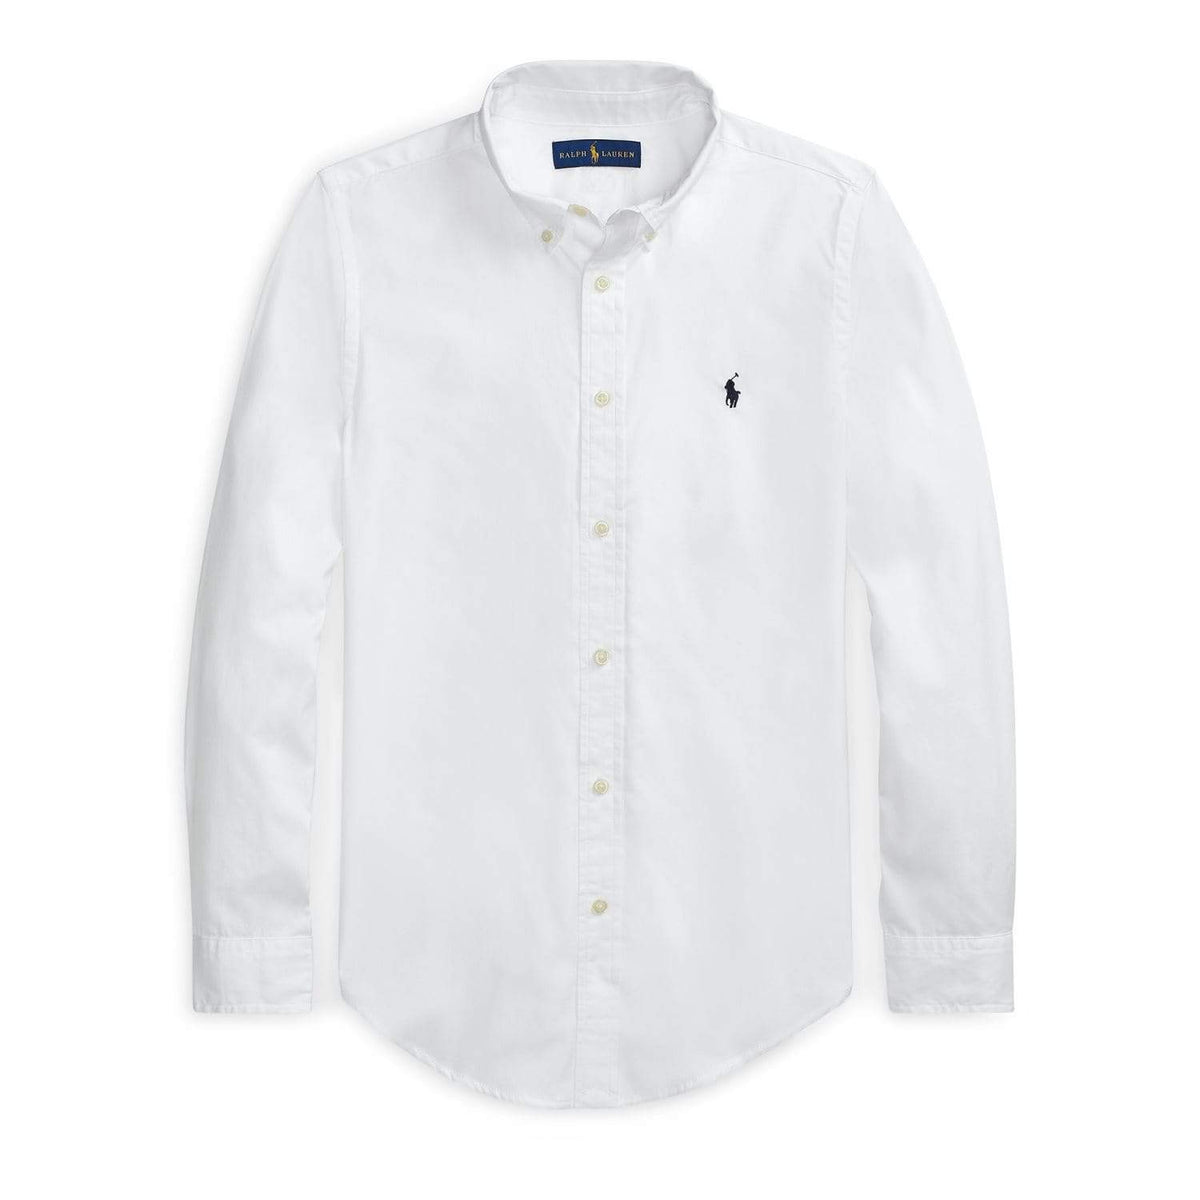 Polo Ralph Lauren - Shirts - Boys Polo Ralph Lauren White Oxford Shirt